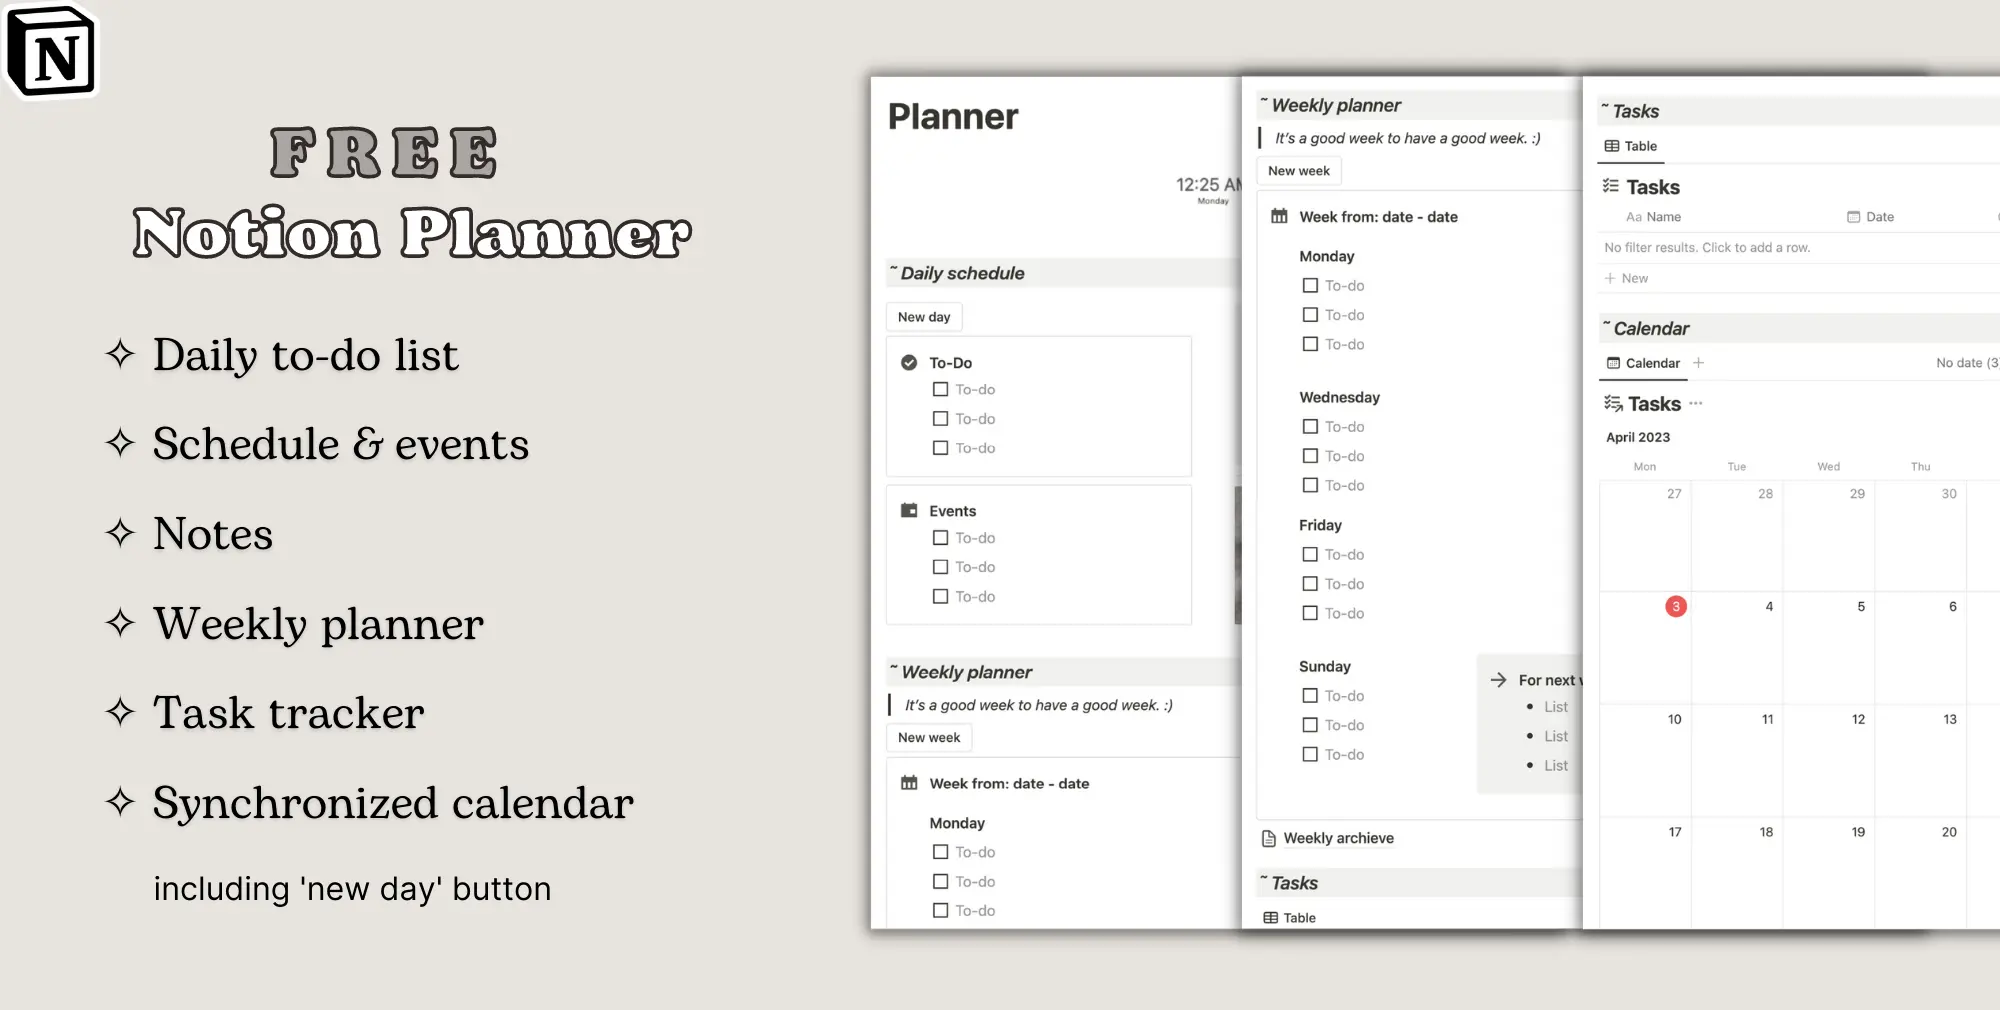 Planner Dashboard image